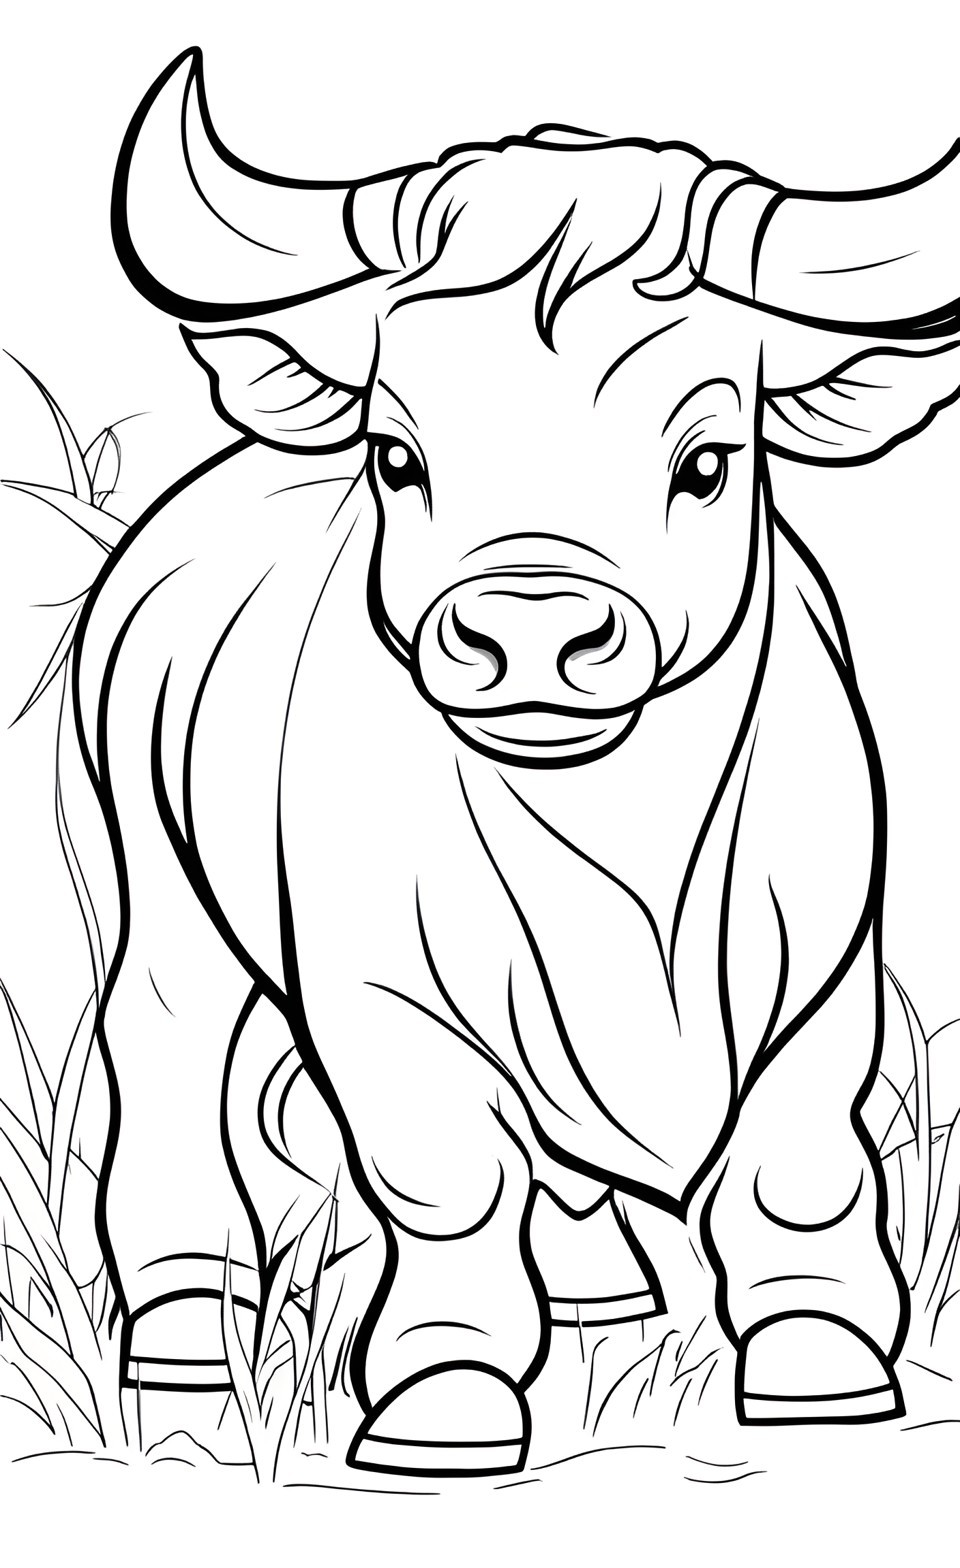 Birbirinden Güzel 15 Boğa Boyama Sayfası | 15 Beautiful Bull Coloring Pages